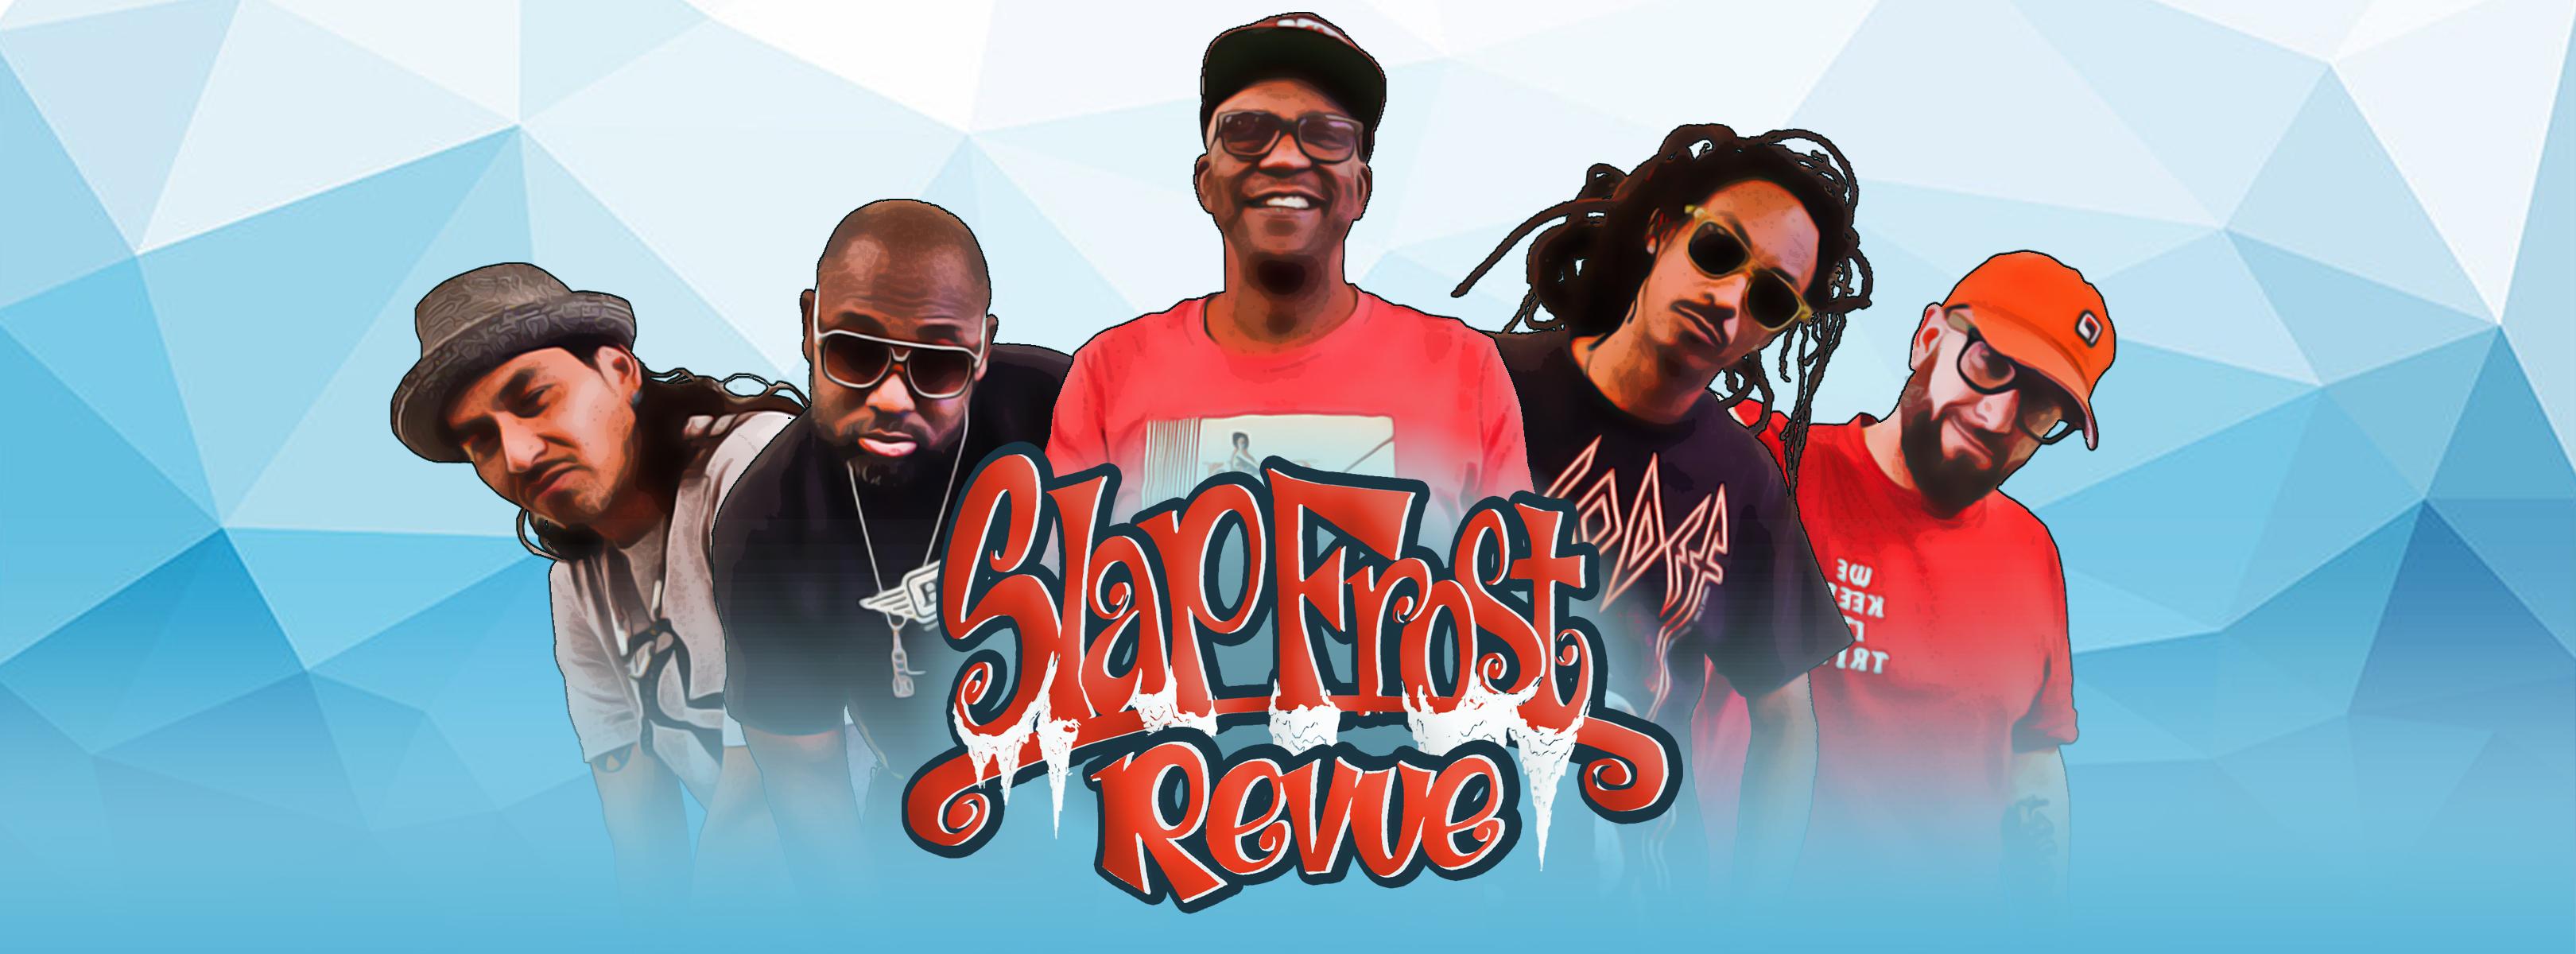 Slap Frost Revue: A Bay Area Hip Hop Variety Show